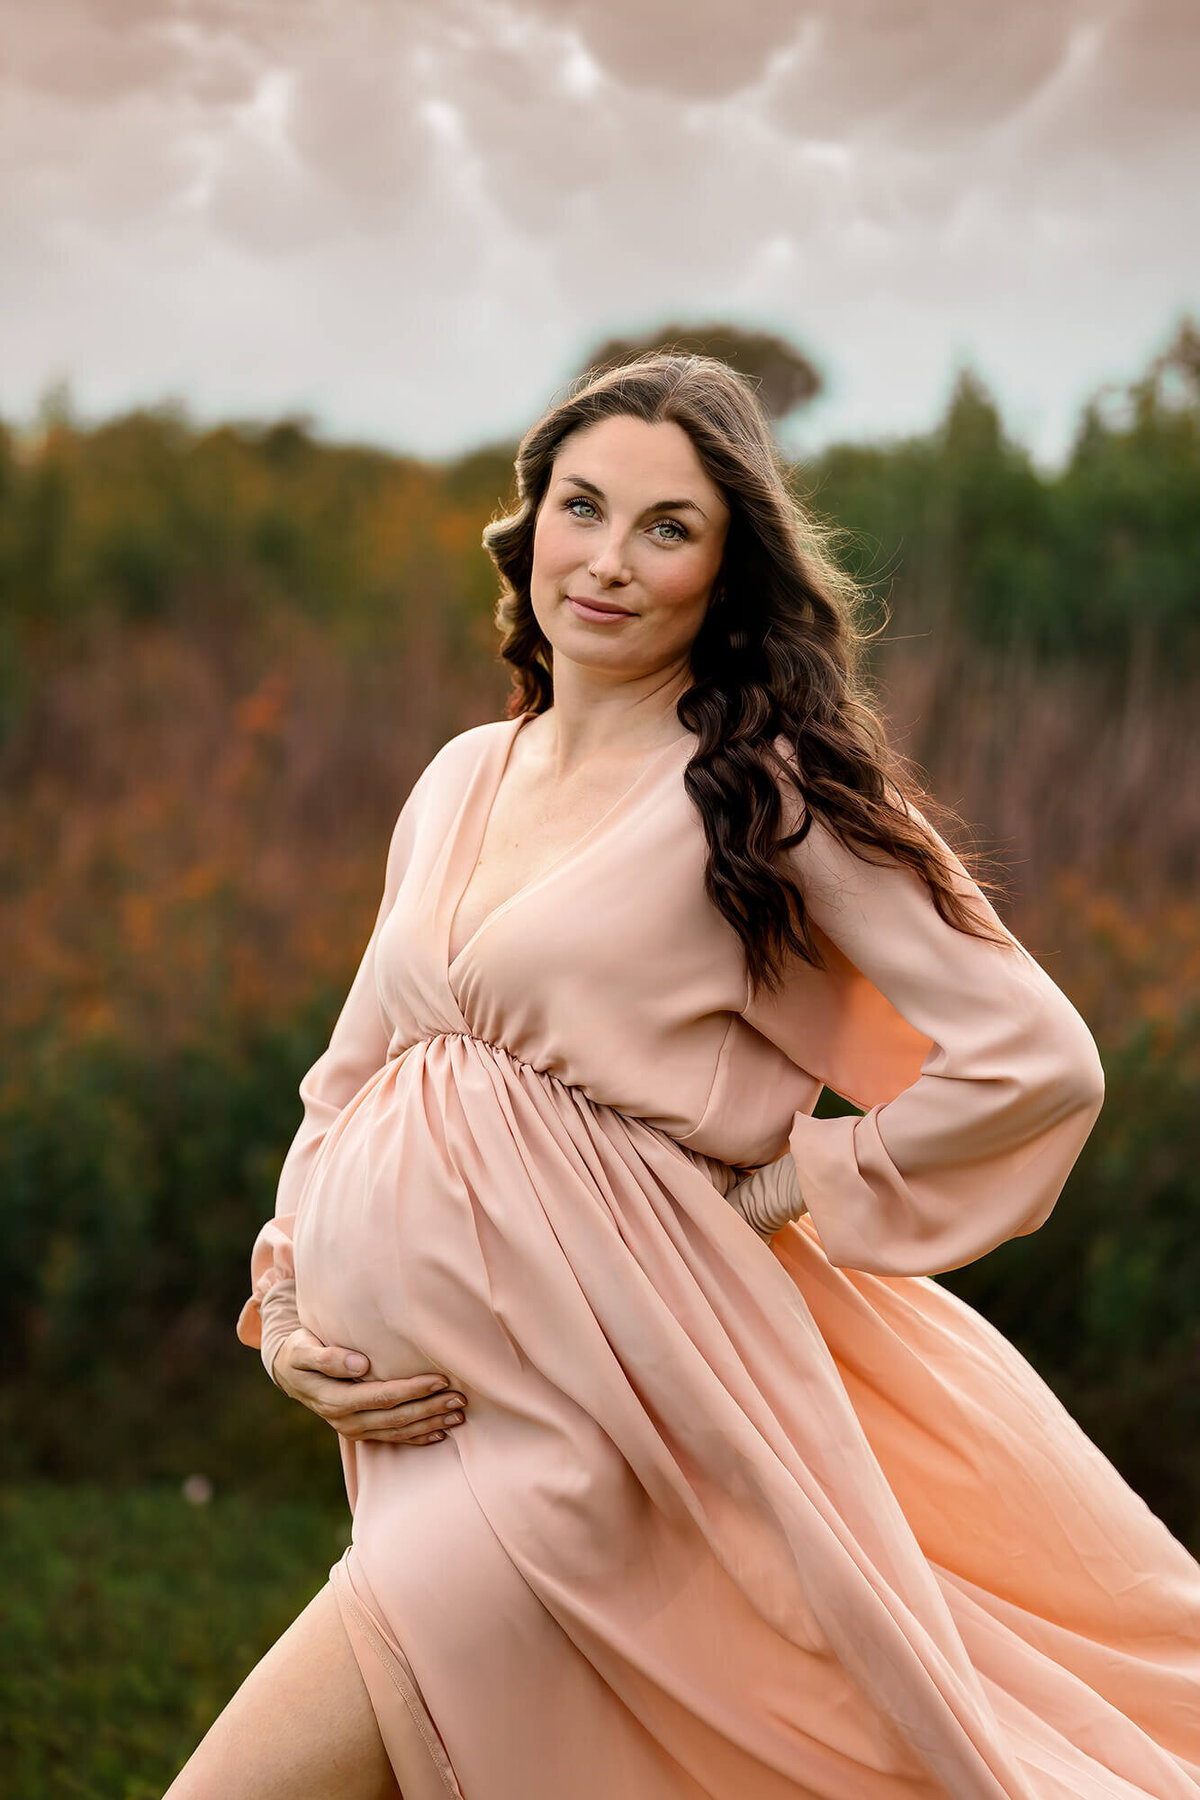 Golden hour maternity photography model wearing light pink dress.